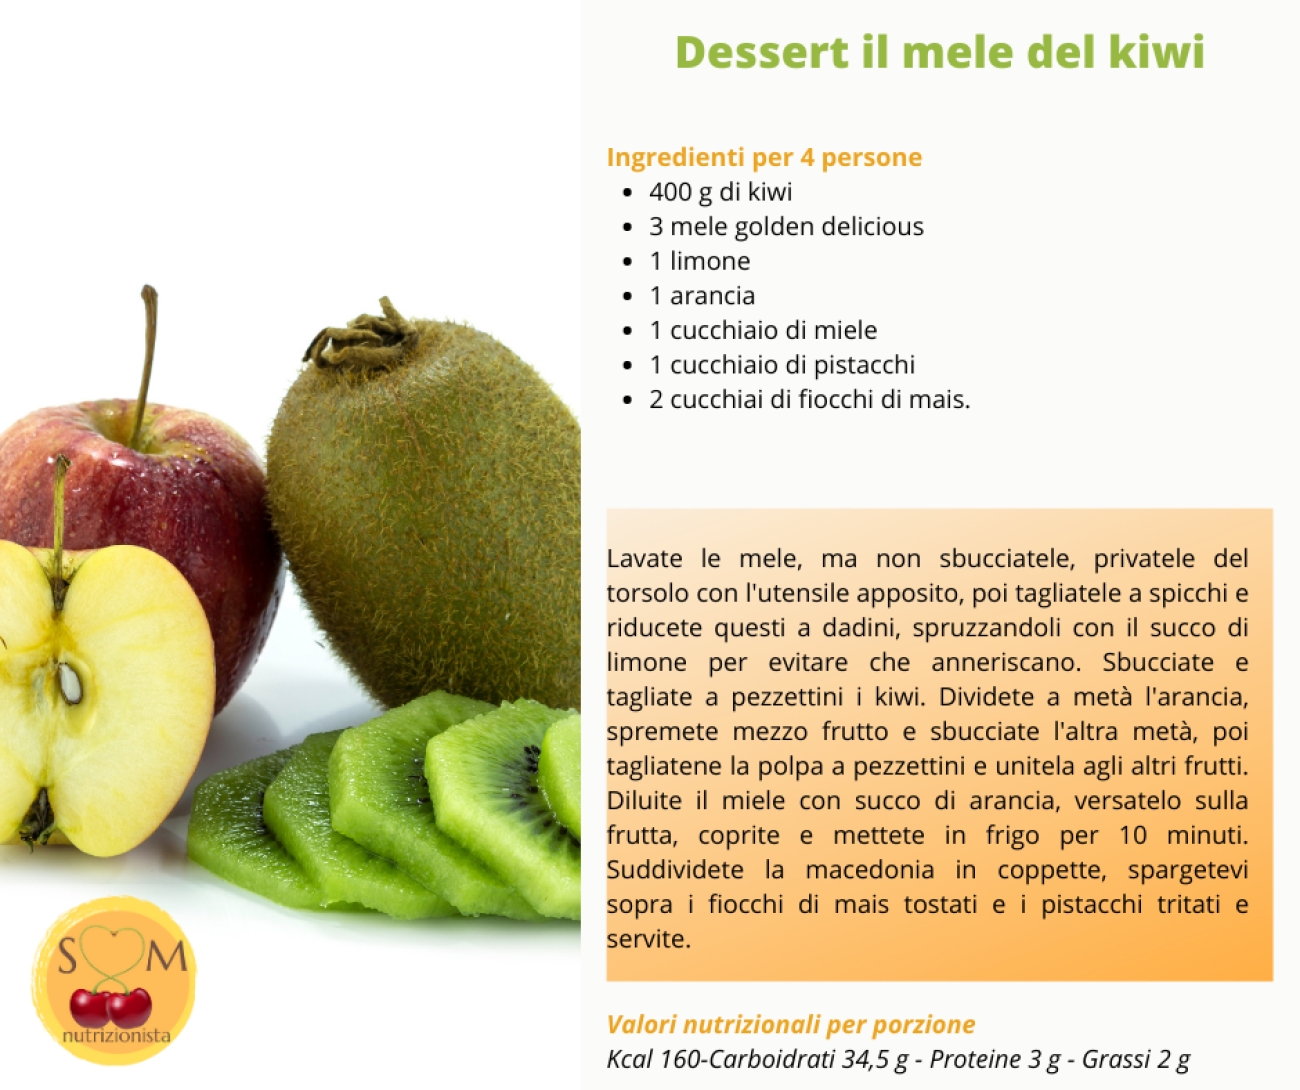 Dessert il mele del kiwi